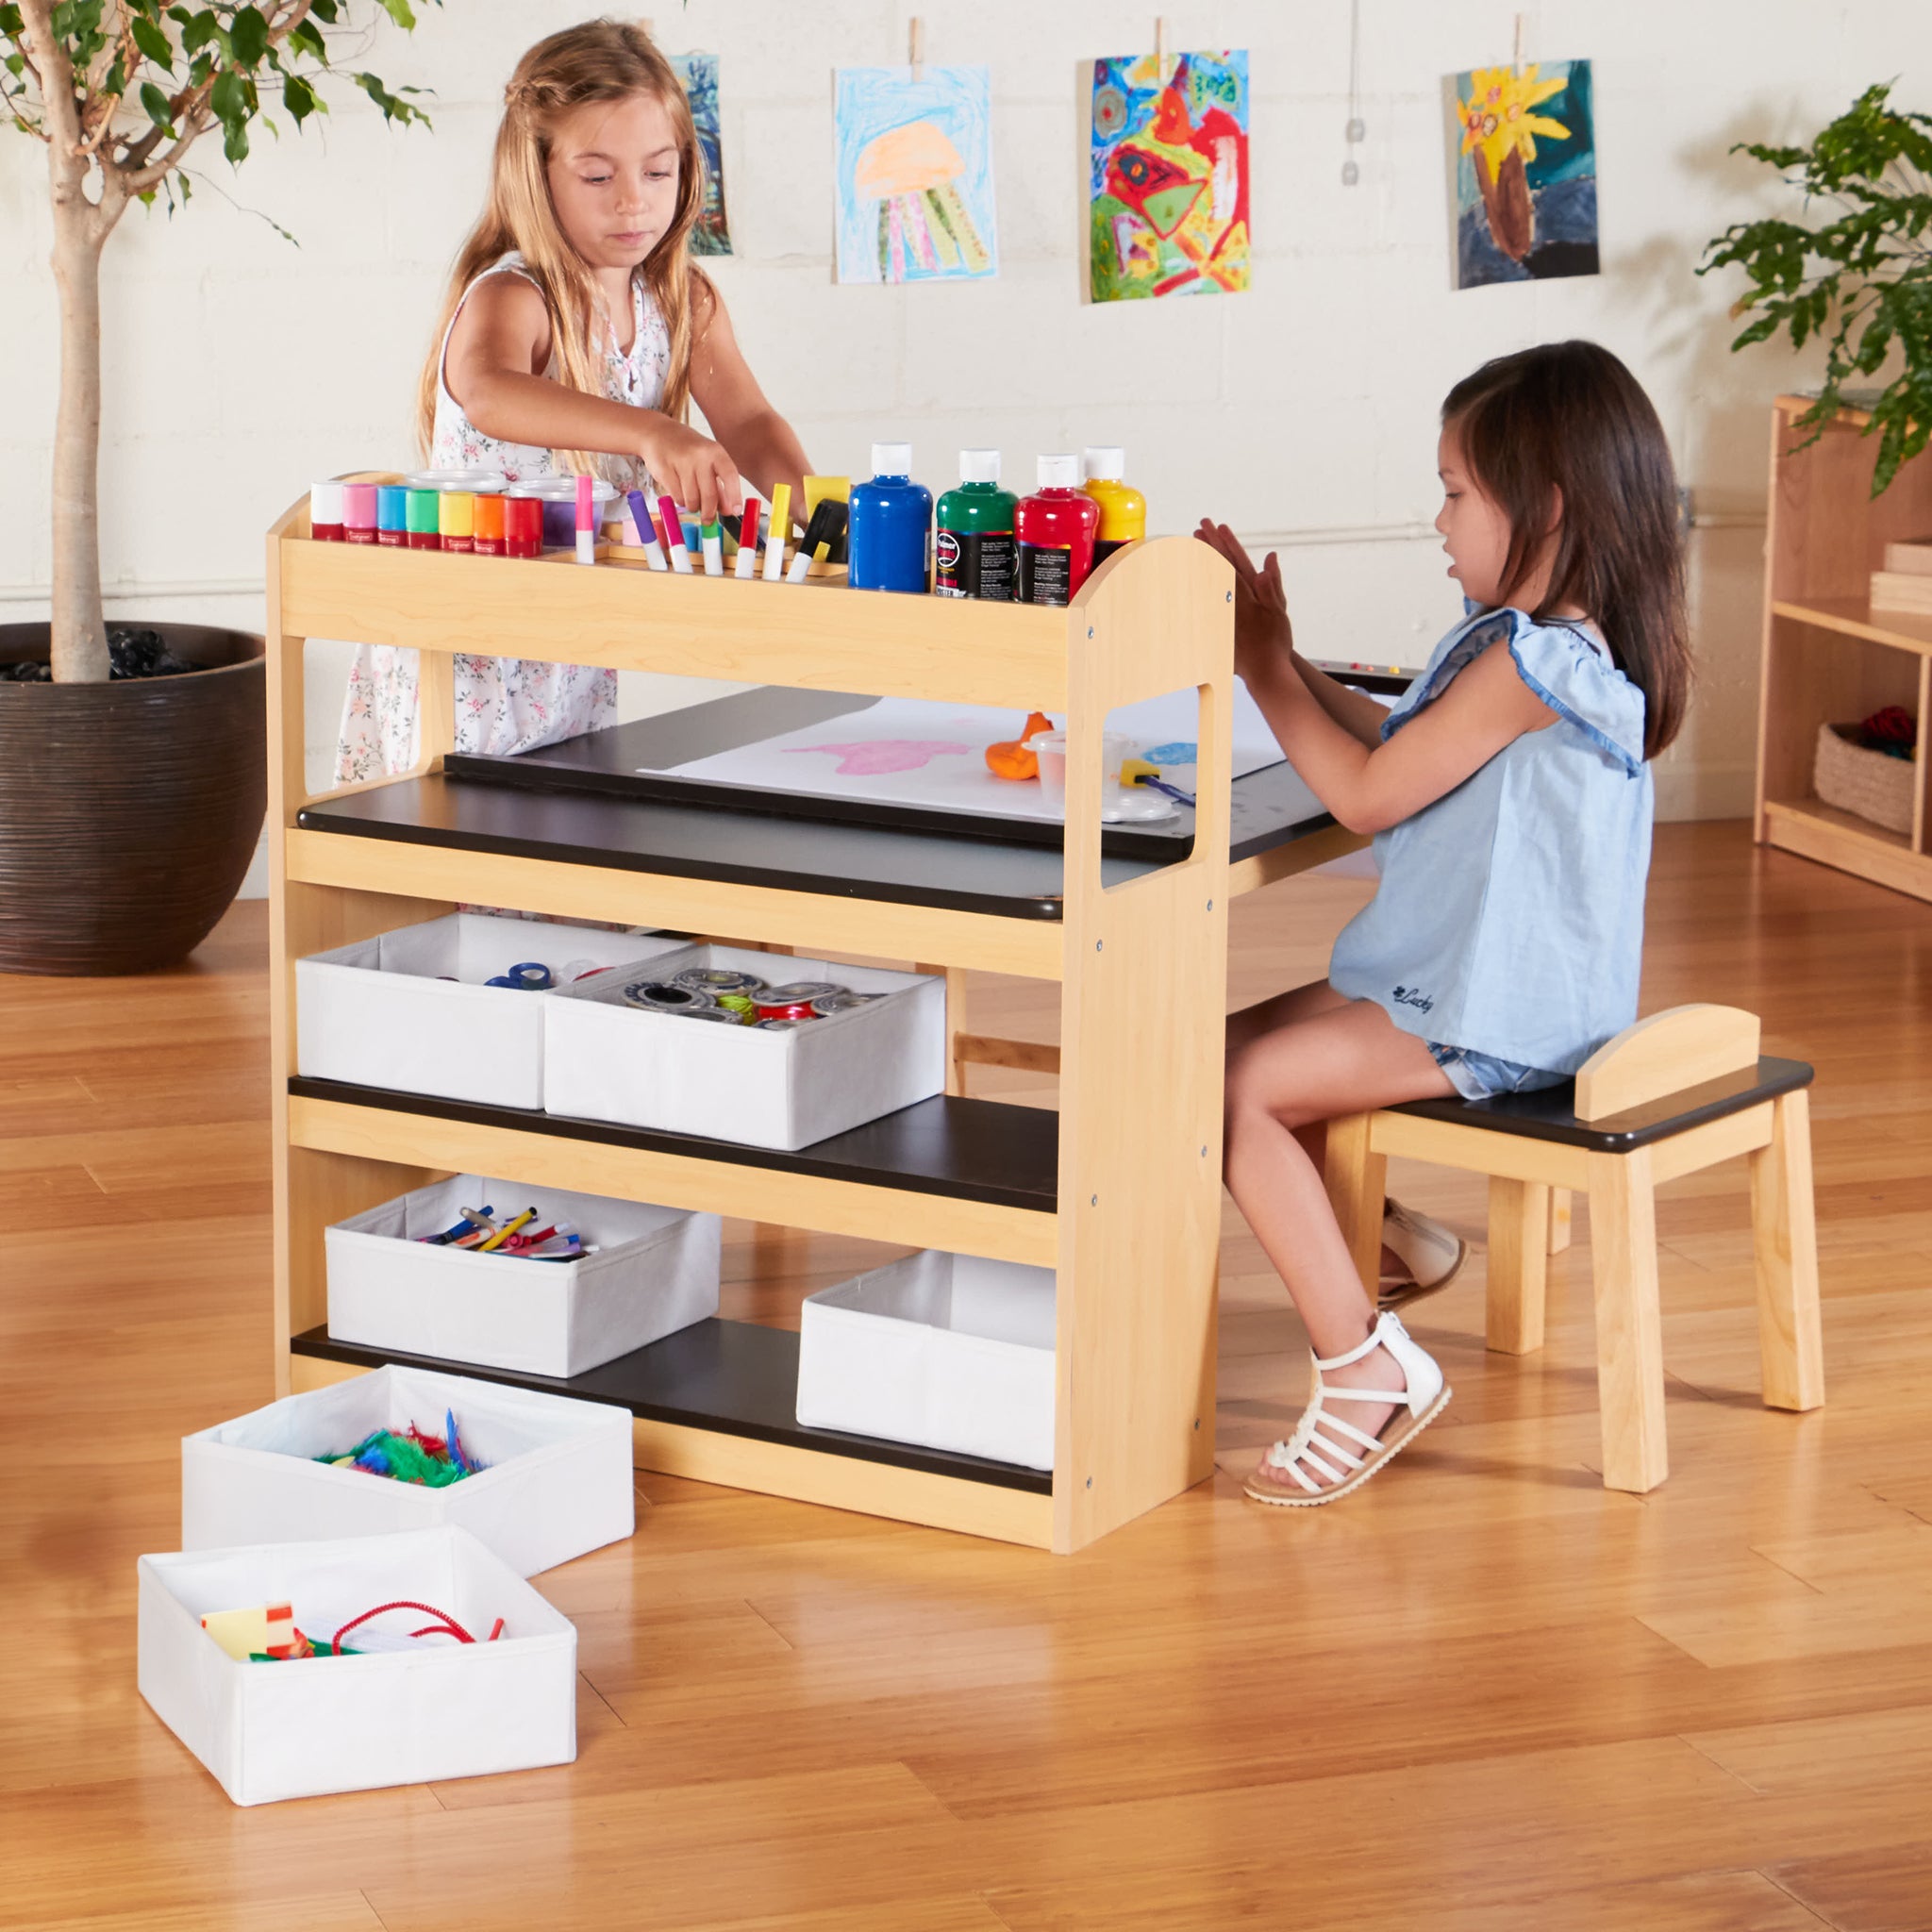 Guidecraft | Premium Kids' Furniture & Educational Preschool Toys